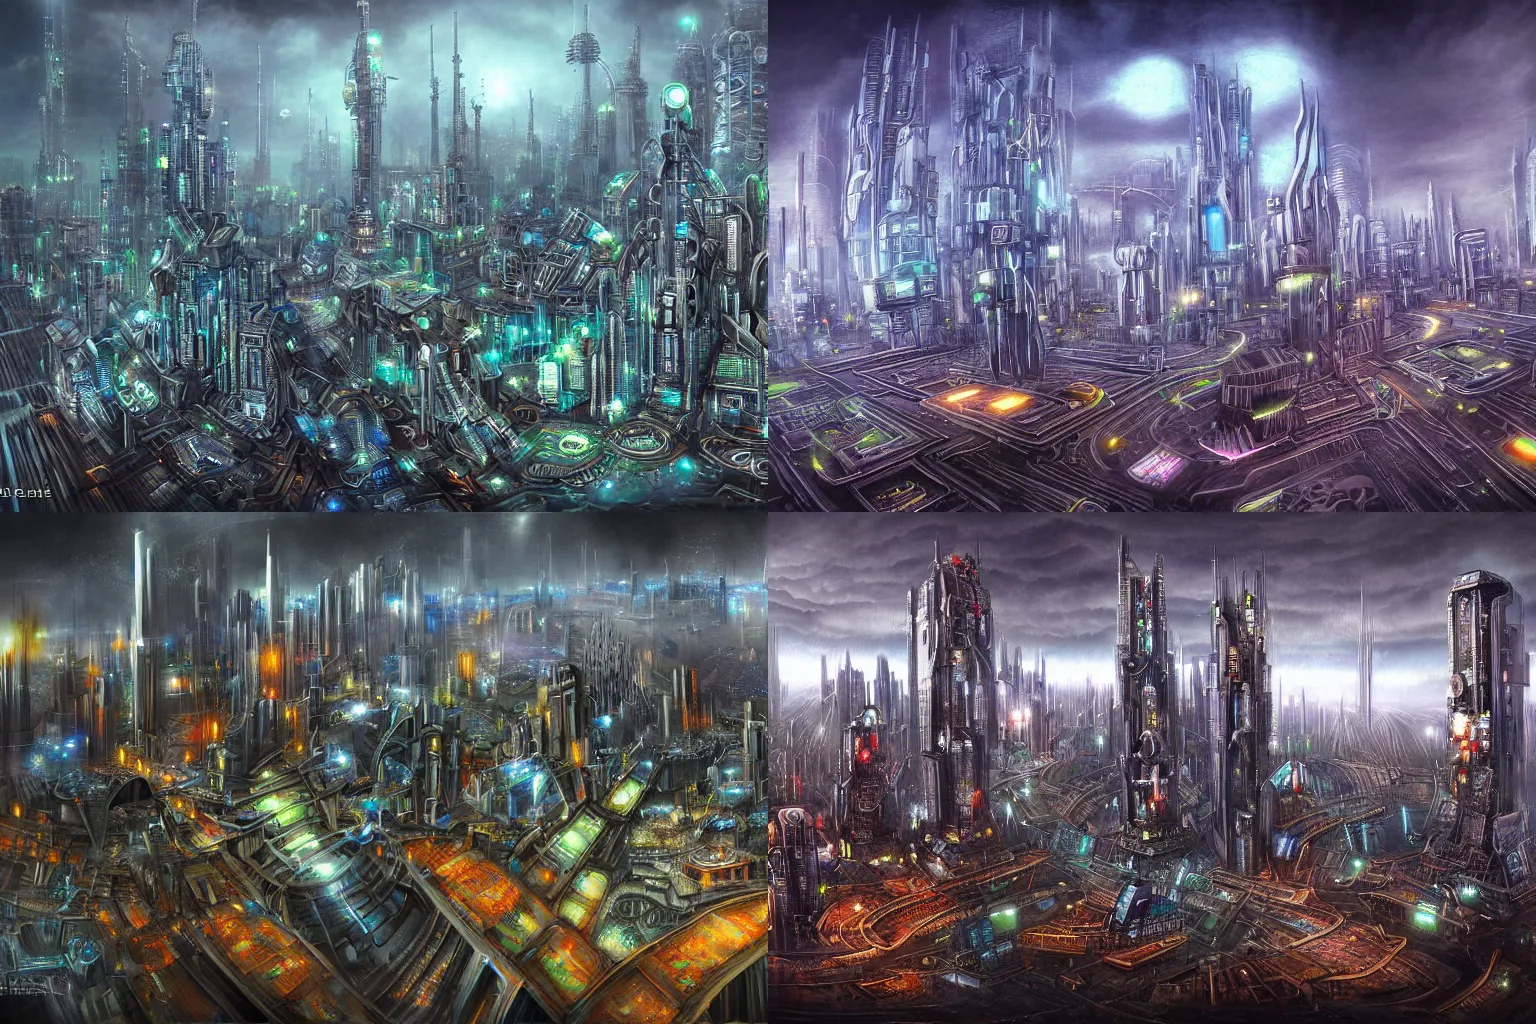 Prompt: futuristic machine city by craic mullins, masterpiece, atmospheric